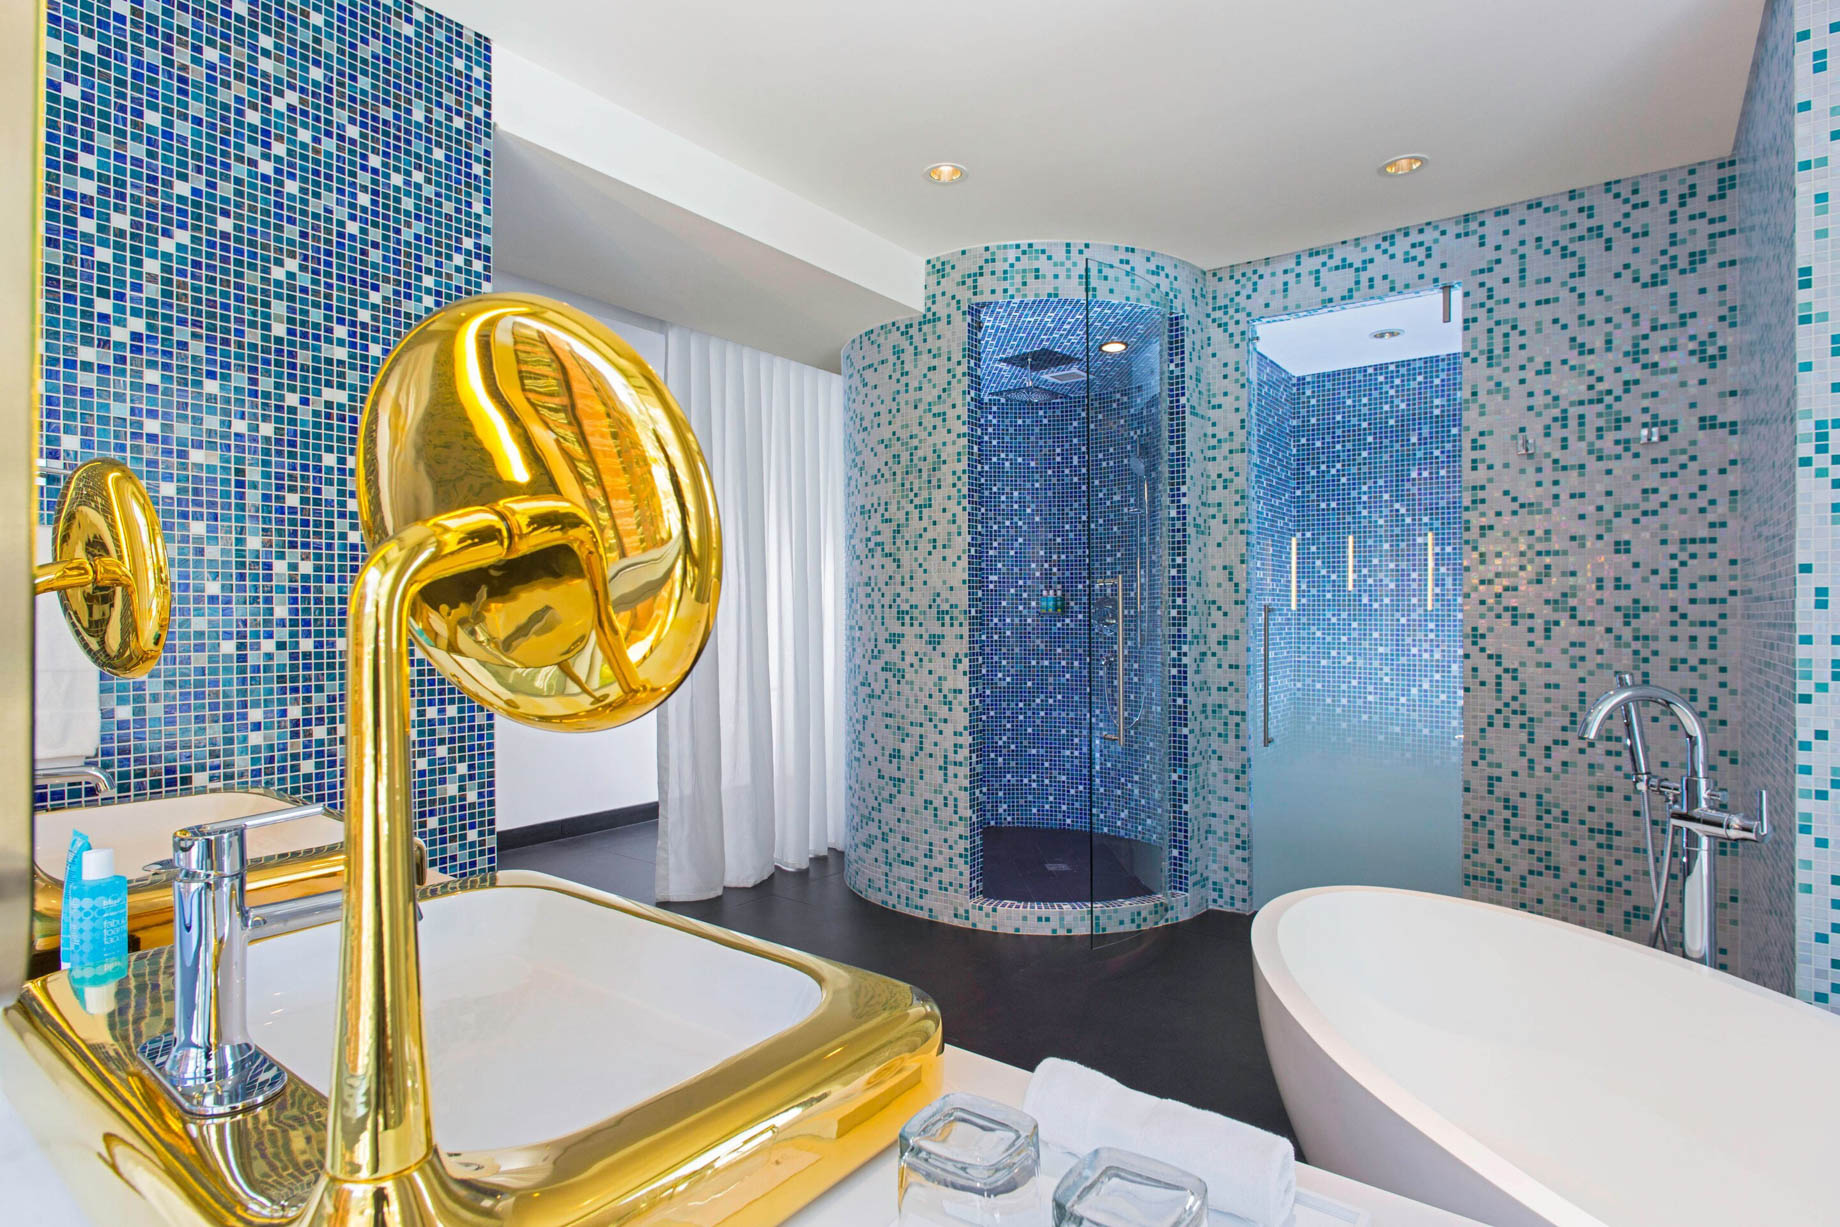 W Bogota Hotel - Bogota, Colombia - Wow King Suite Bathroom Shower